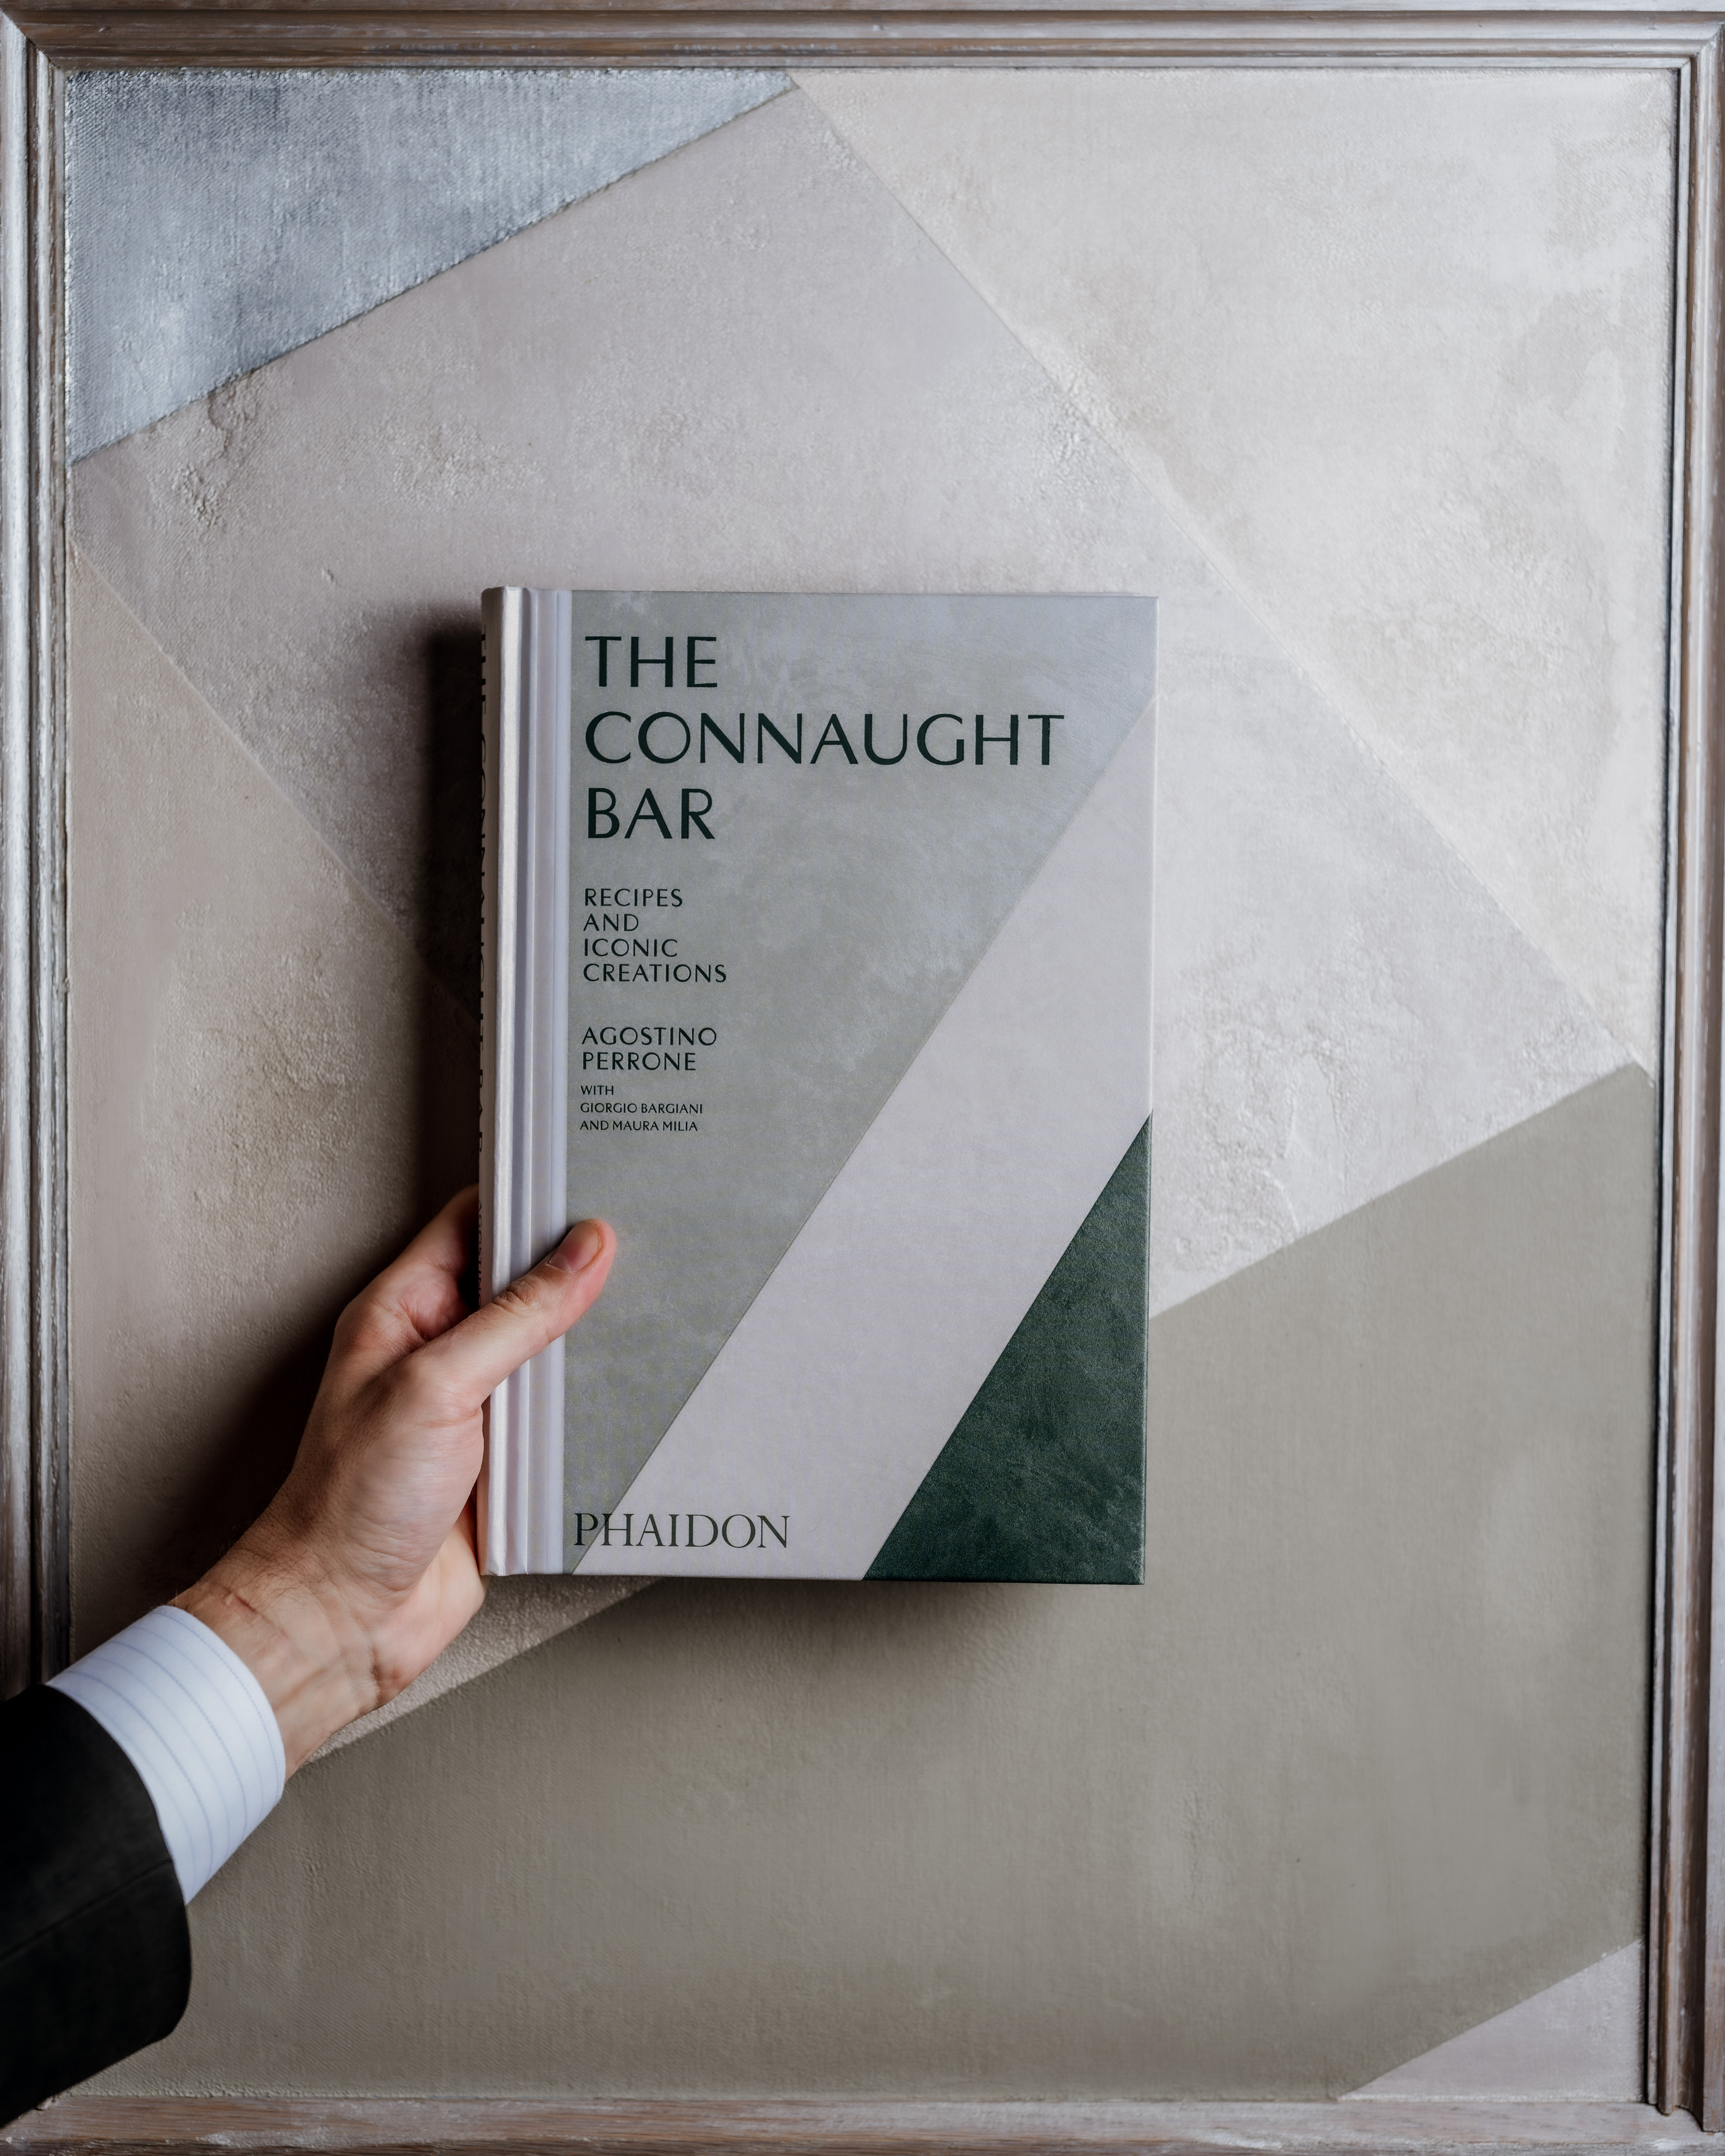 The Connaught Bar recipe book